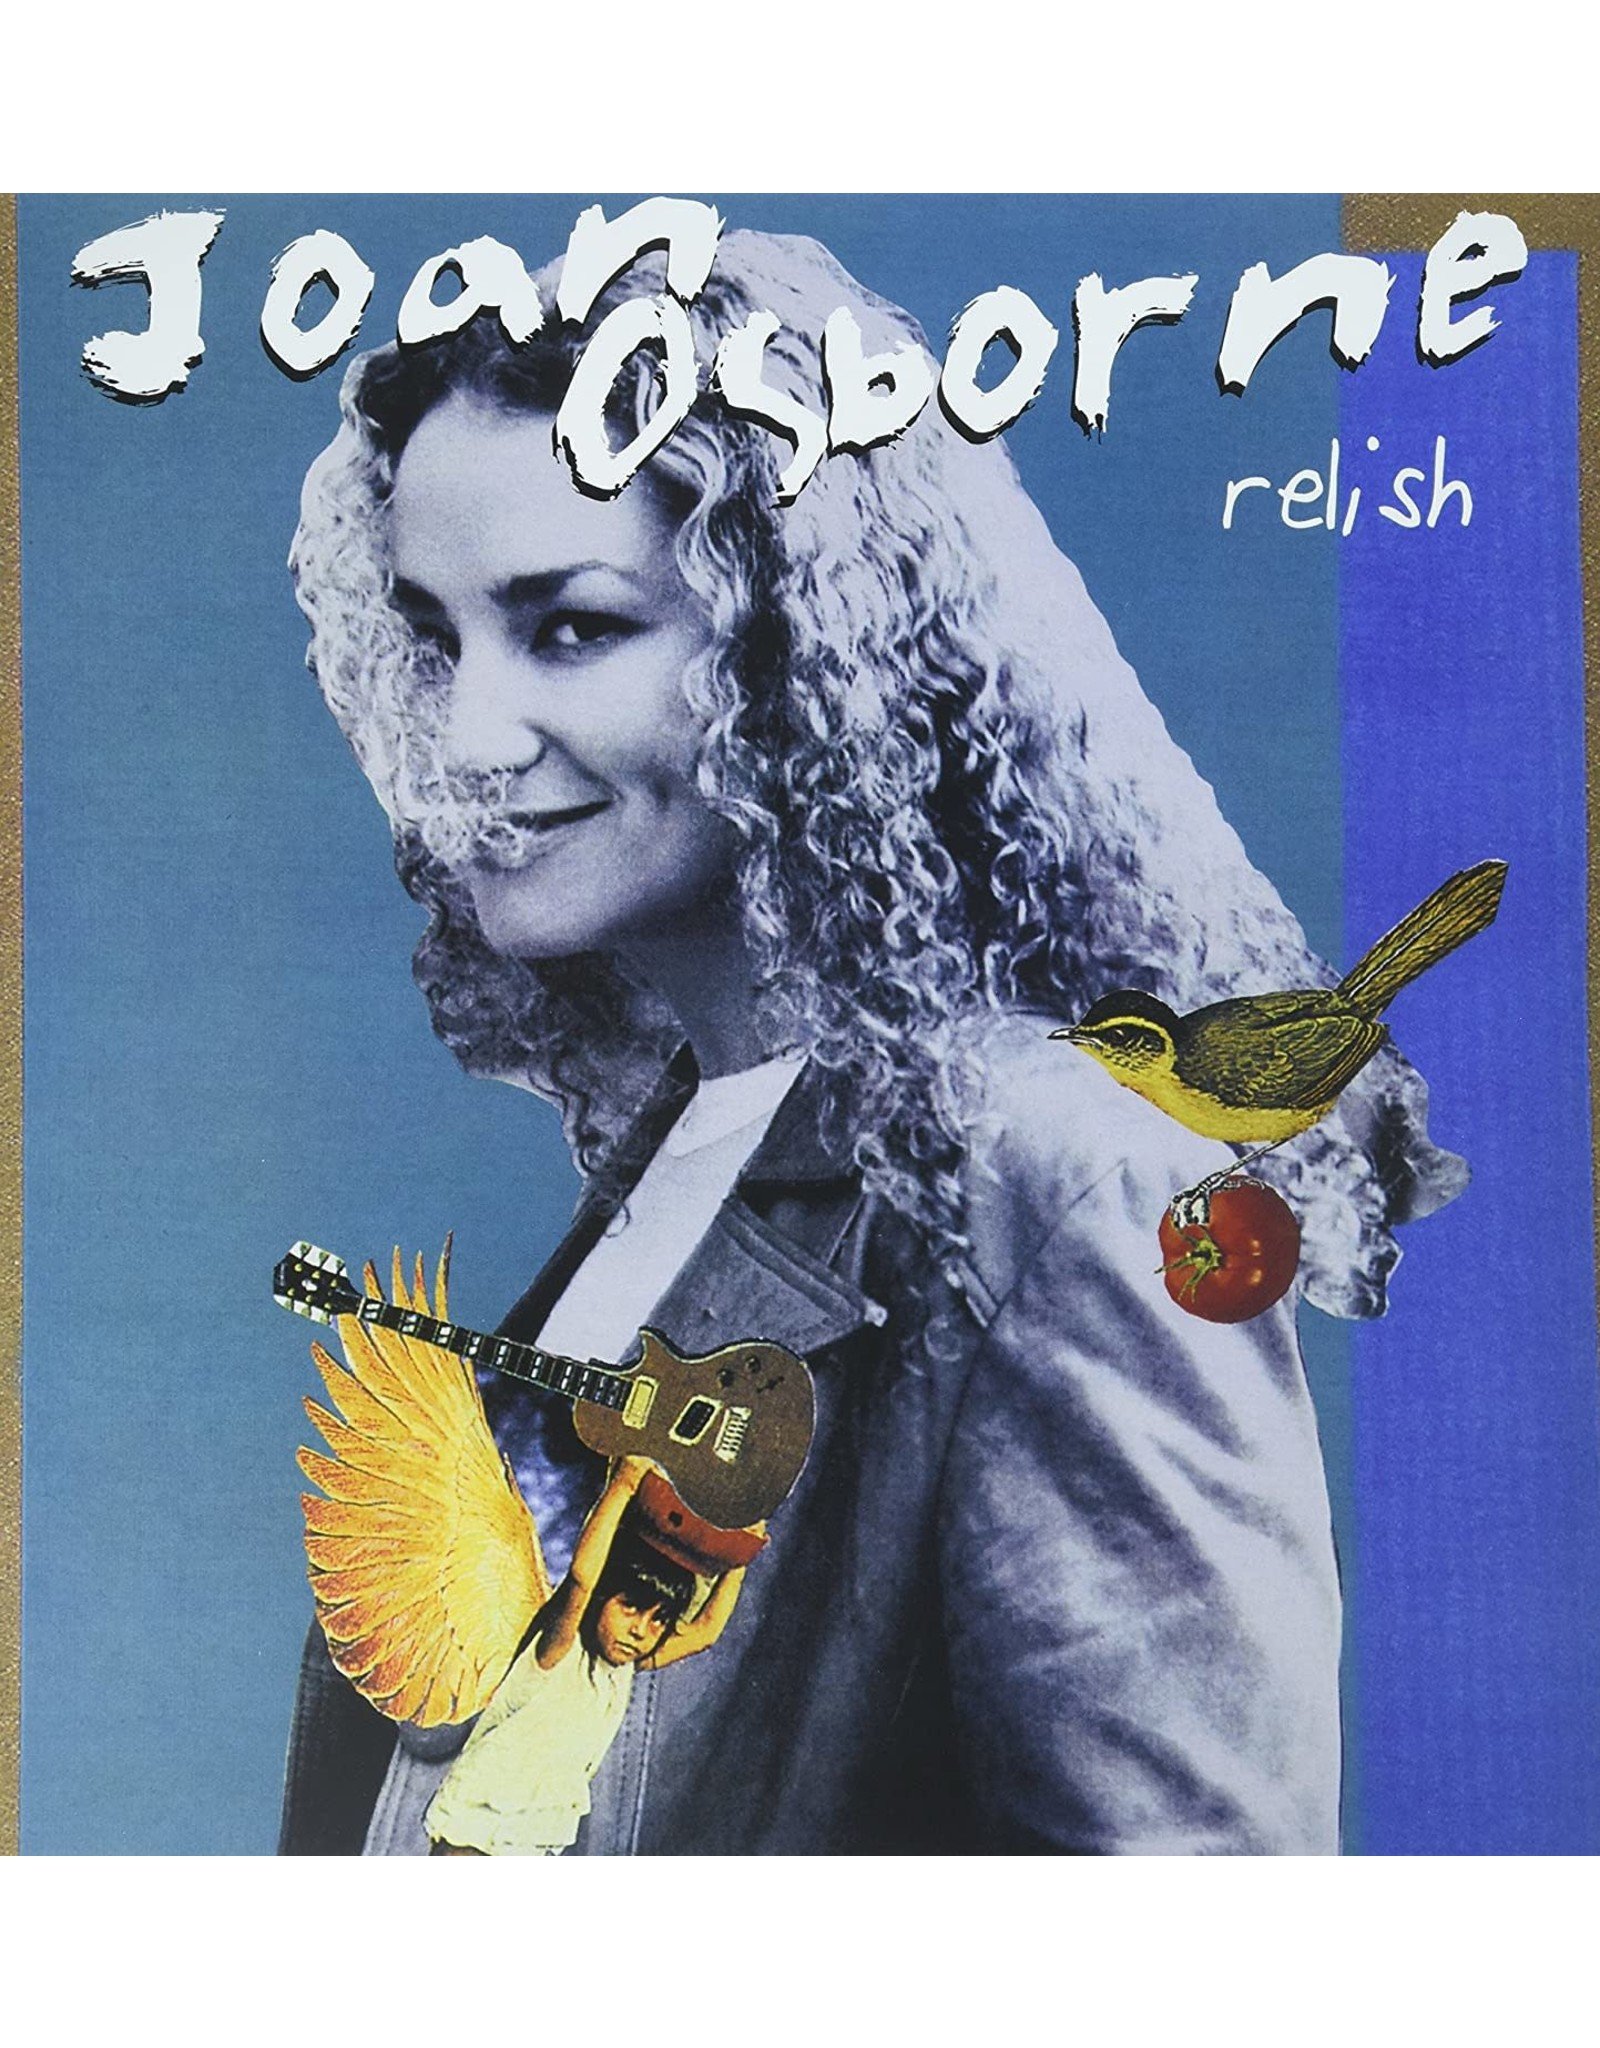 Joan Osborne - Relish (20th Anniversary)